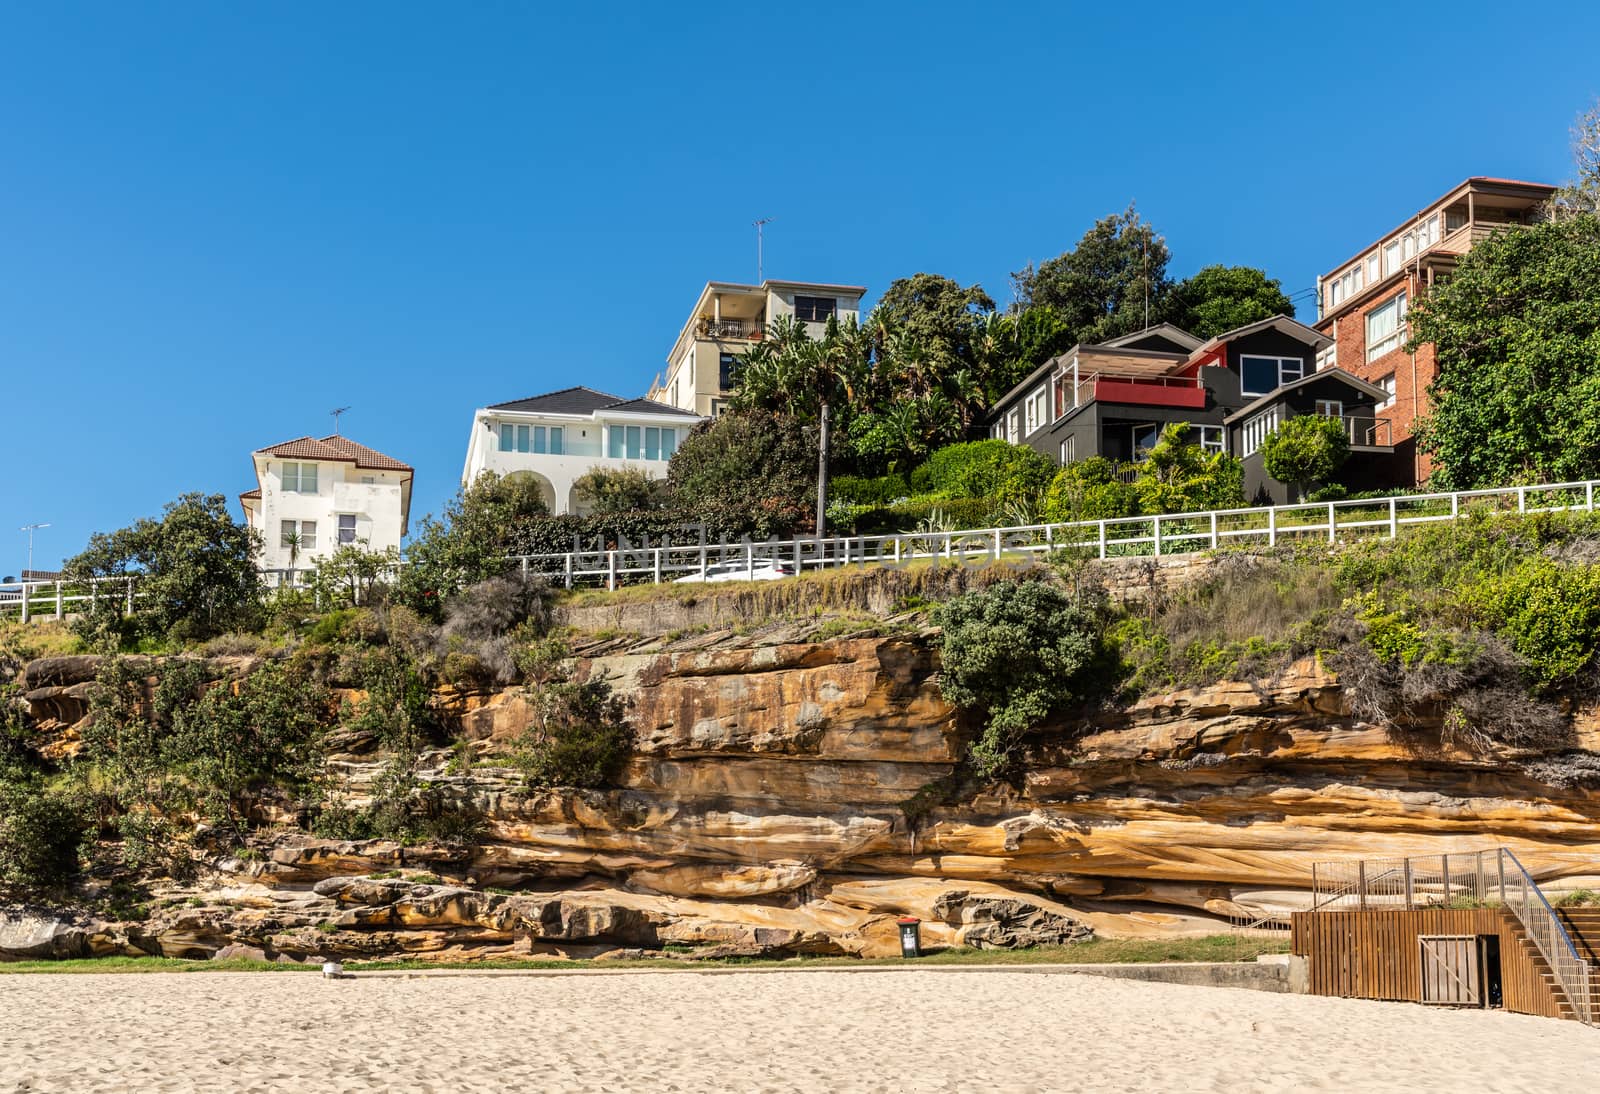 The cliffs and sand of Tamarama Beach, Sydney Australia. by Claudine